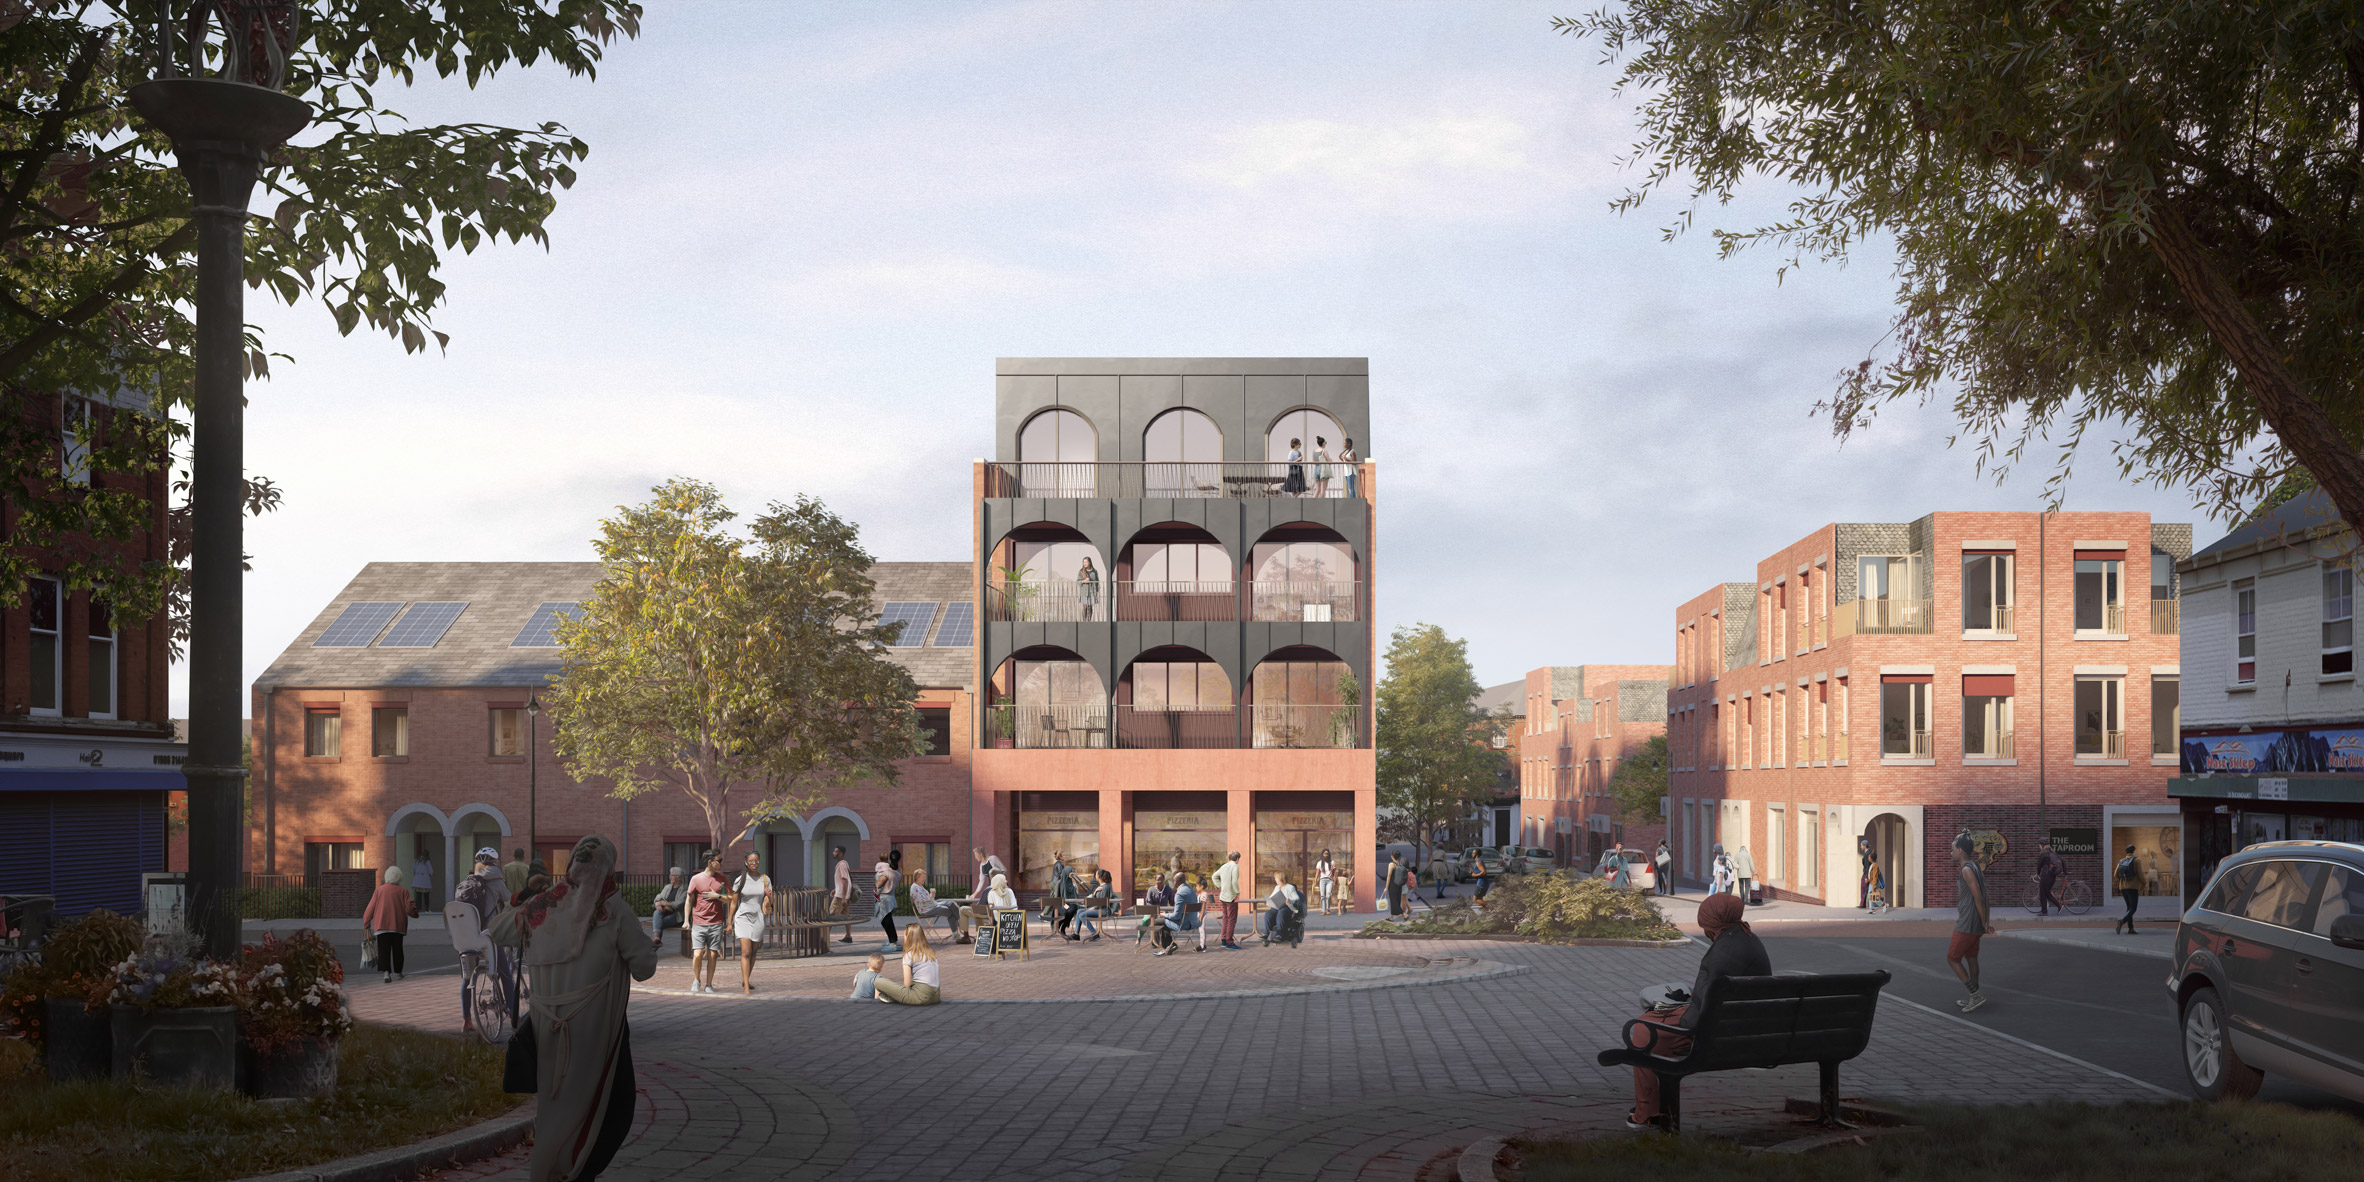 Housing scheme for Milton Keynes District Council by Mole Architects and Mikhail Riches